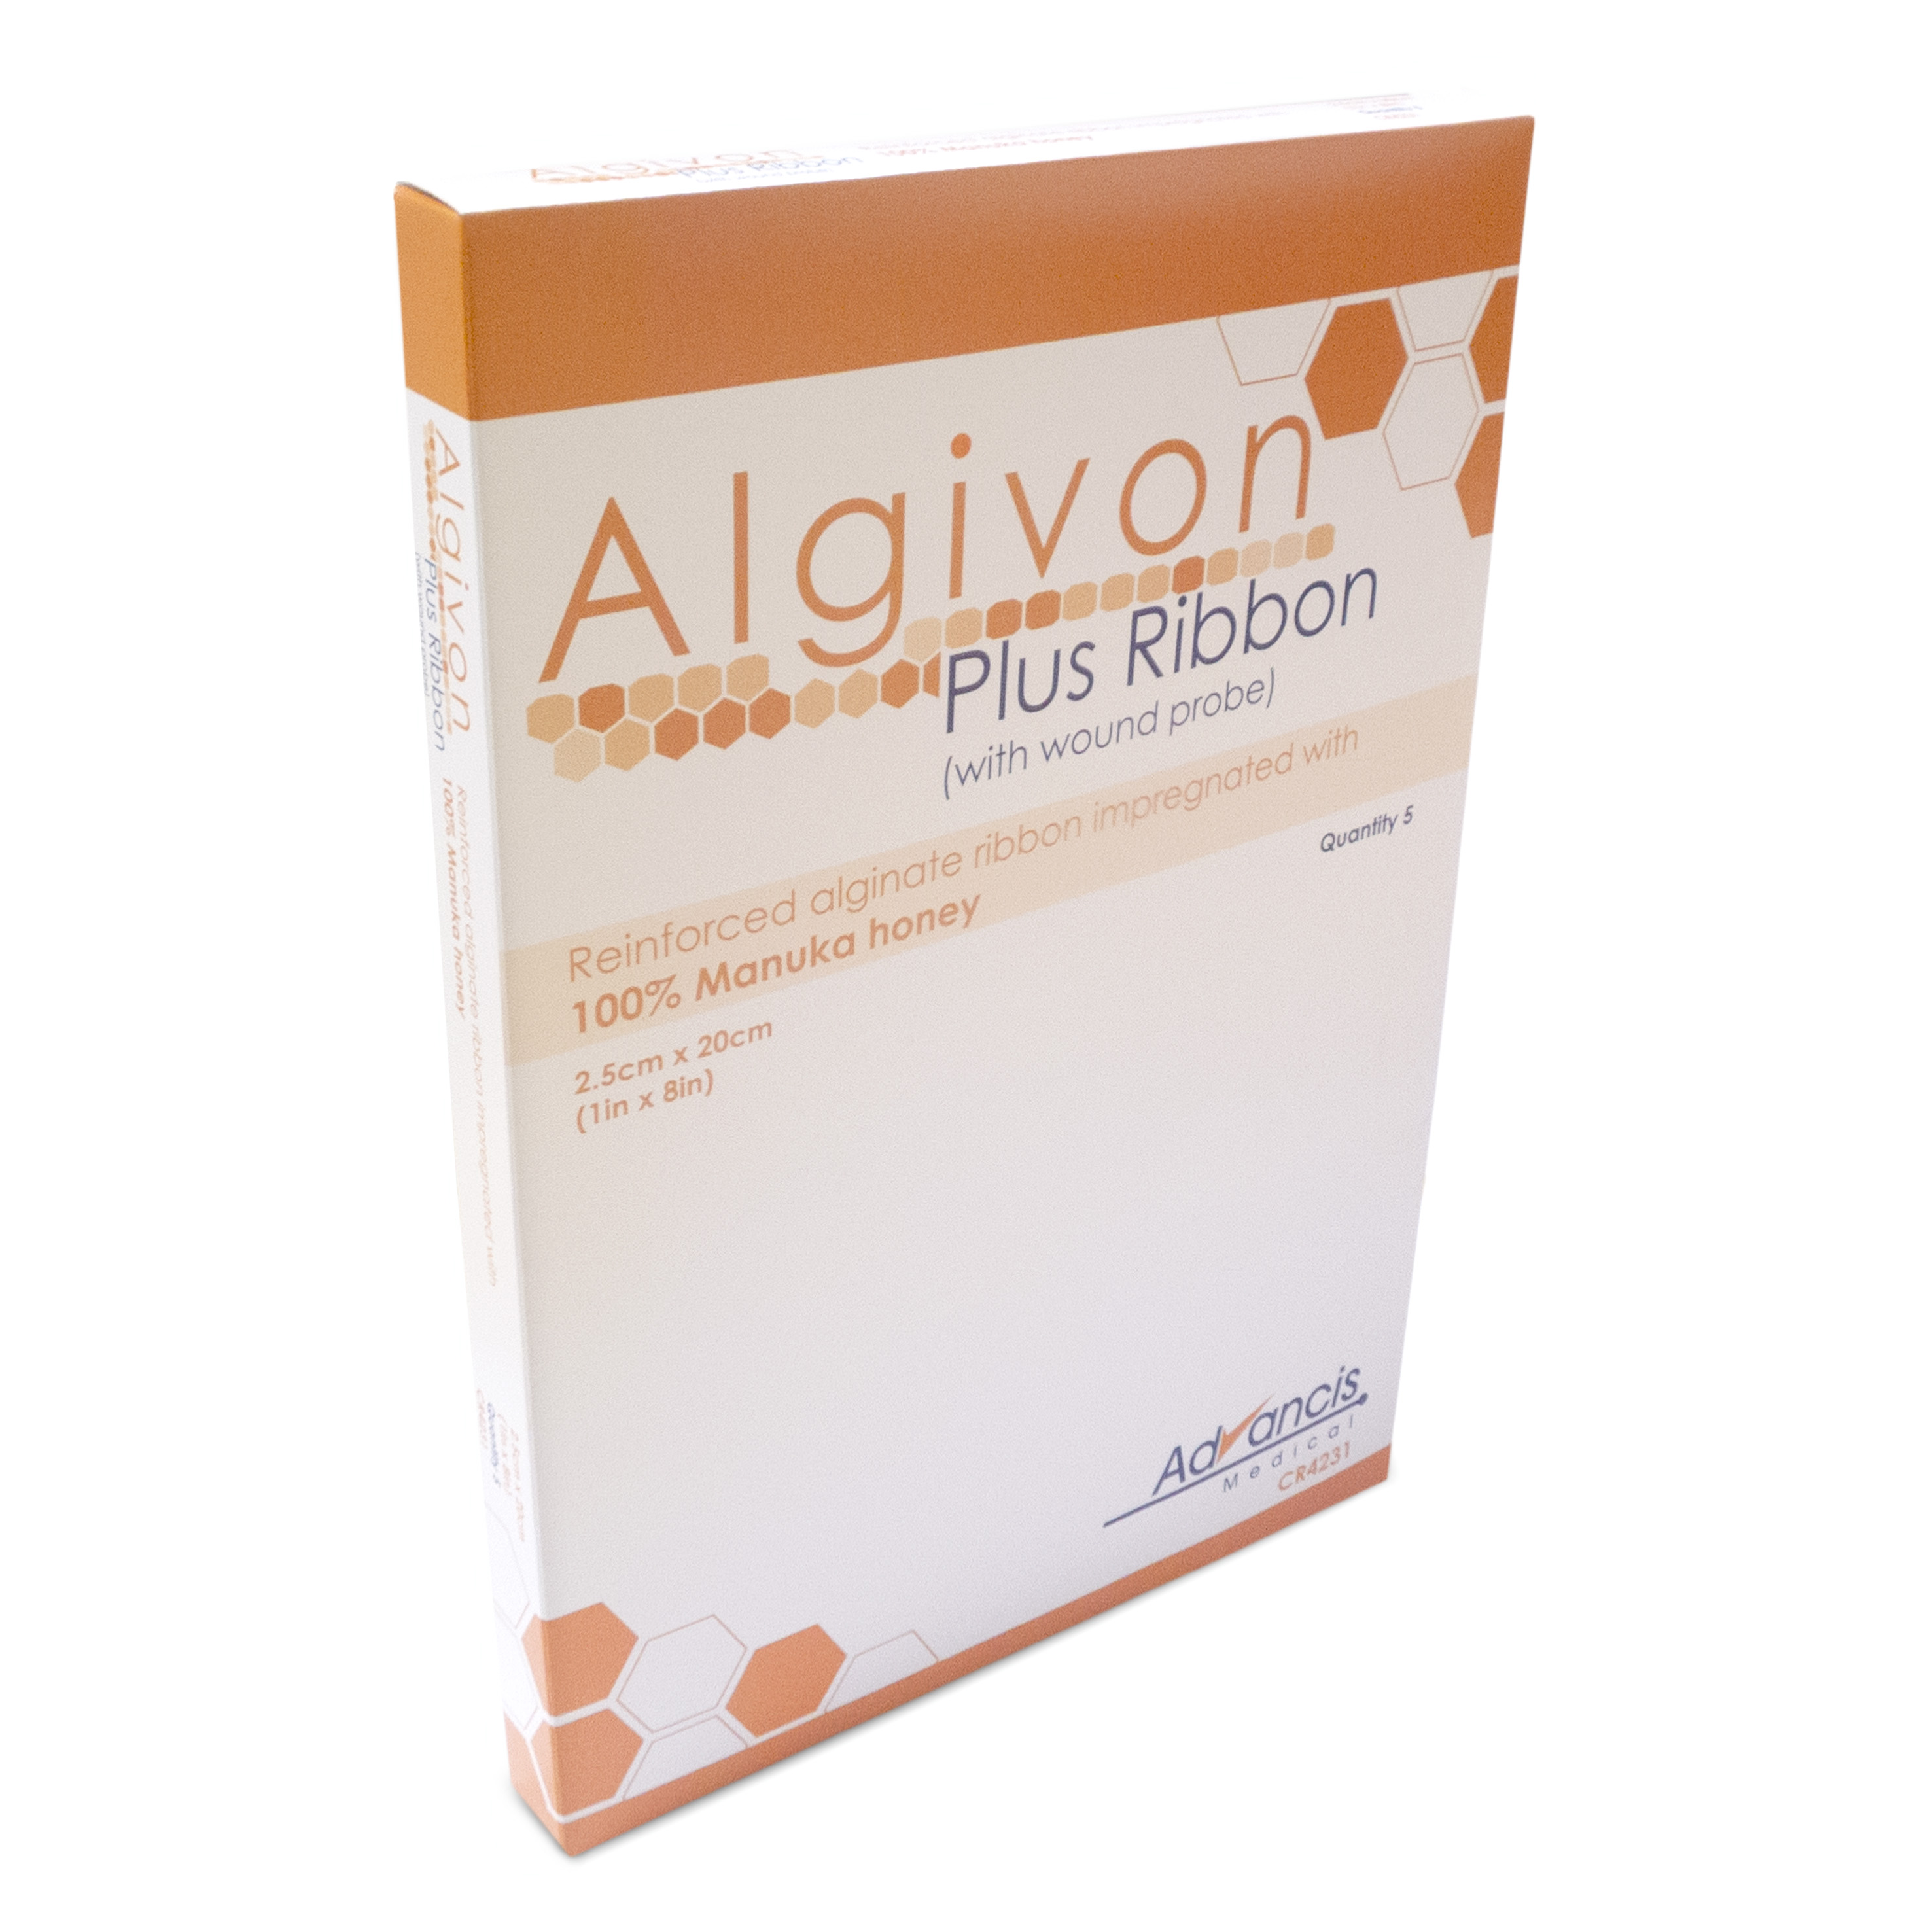 Algivon Plus Ribbon